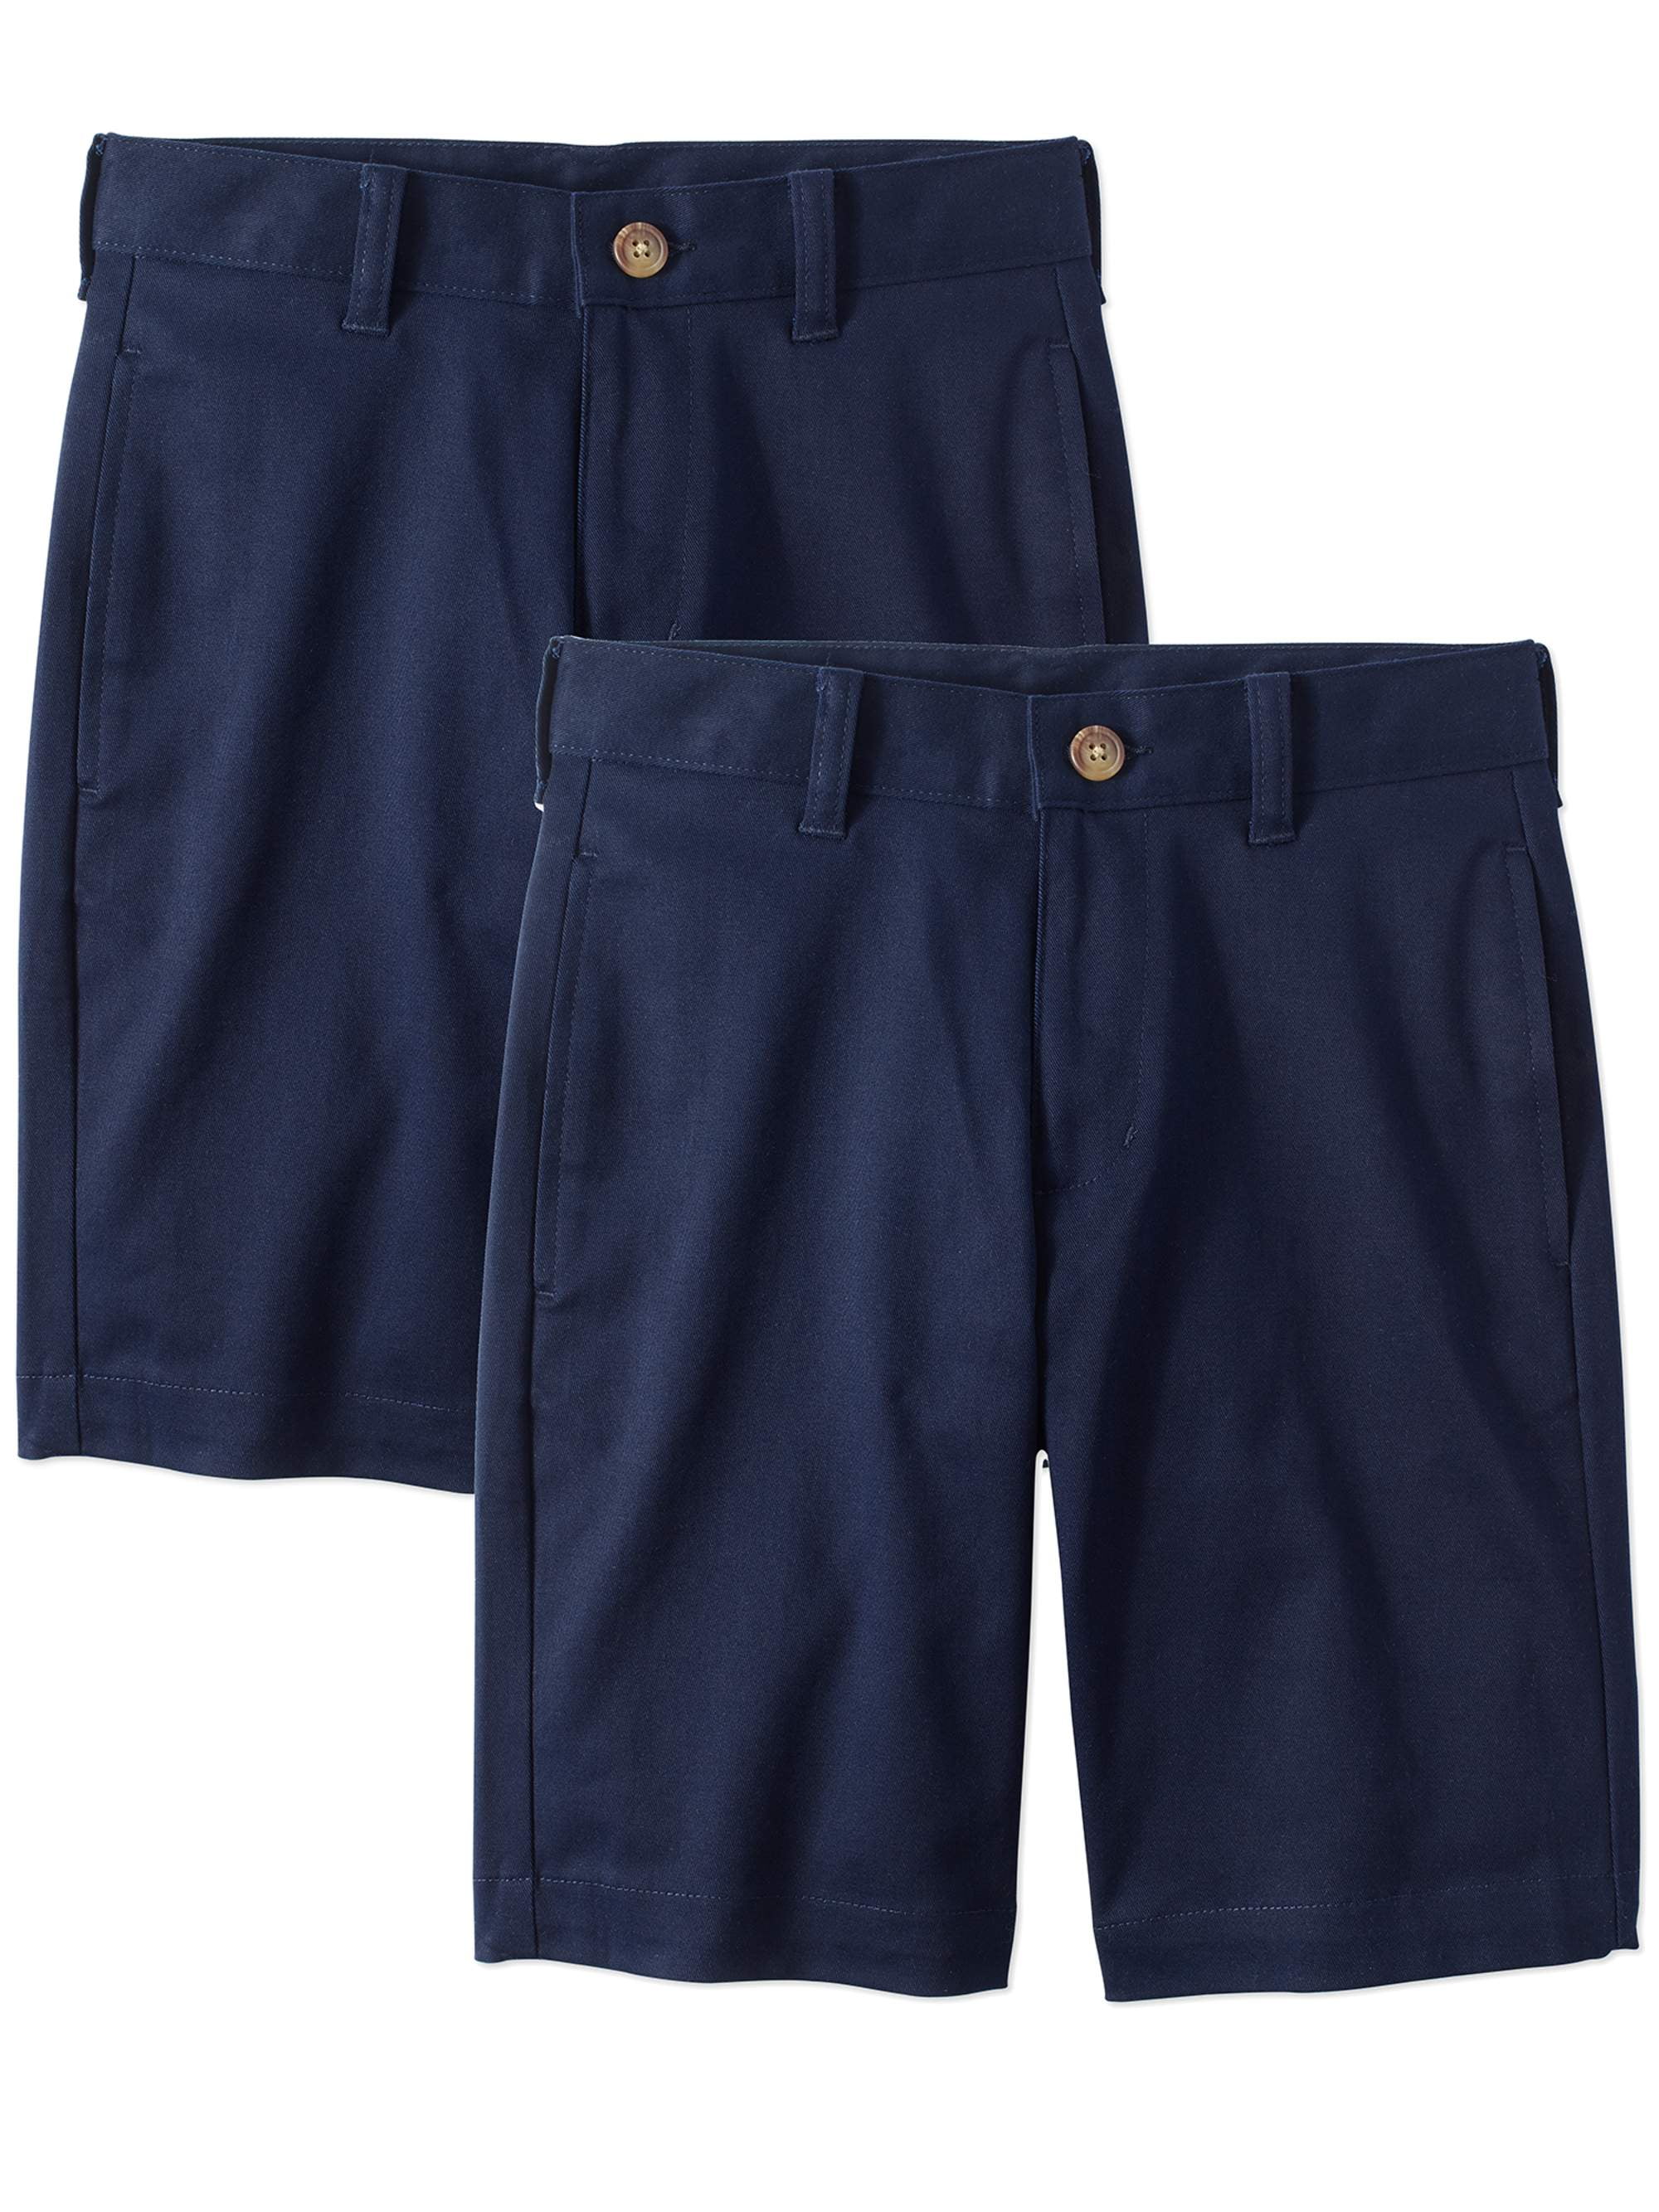 Wonder Nation Boys School Uniform Super Soft Flat Front Shorts, 2-Pack ...